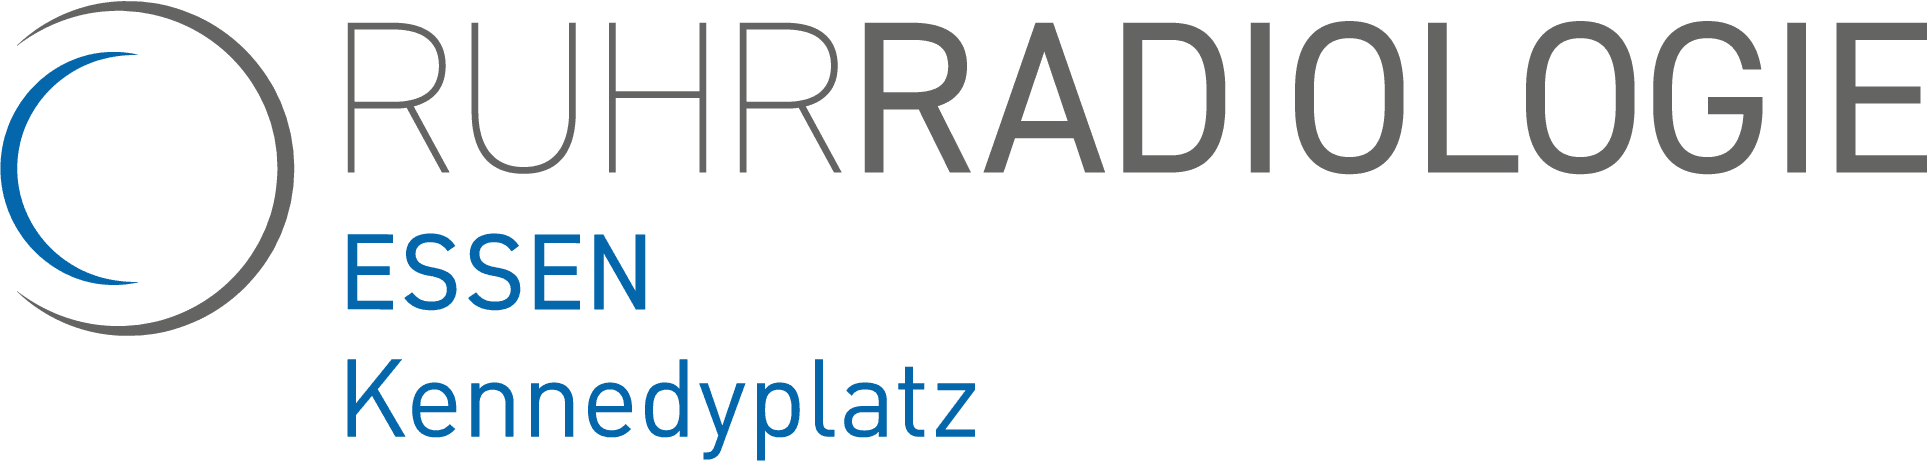 Ruhrradiologie_Essen_Kennedyplatz_Logo_trans.png